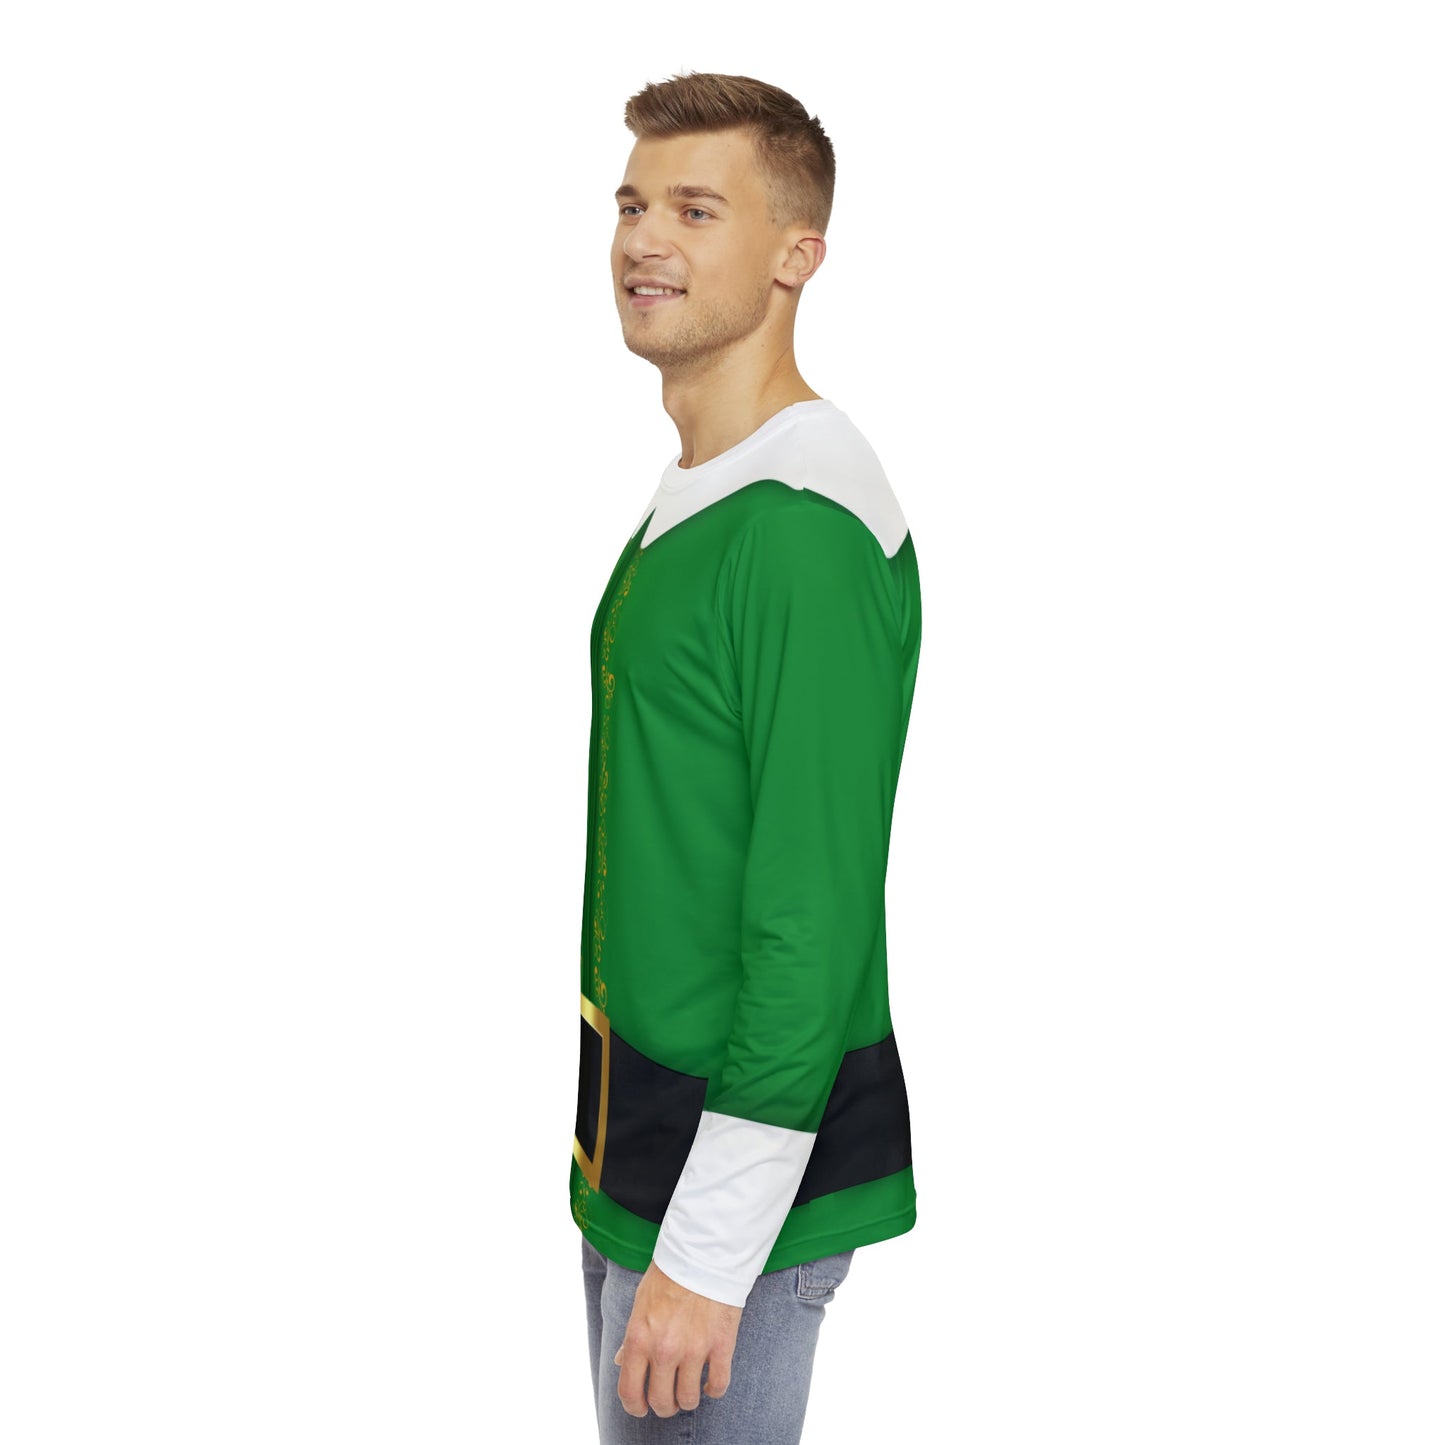 The Elf Men's Long Sleeve Shirt adult christmas dressadult christmas topAll Over Print#tag4##tag5##tag6#